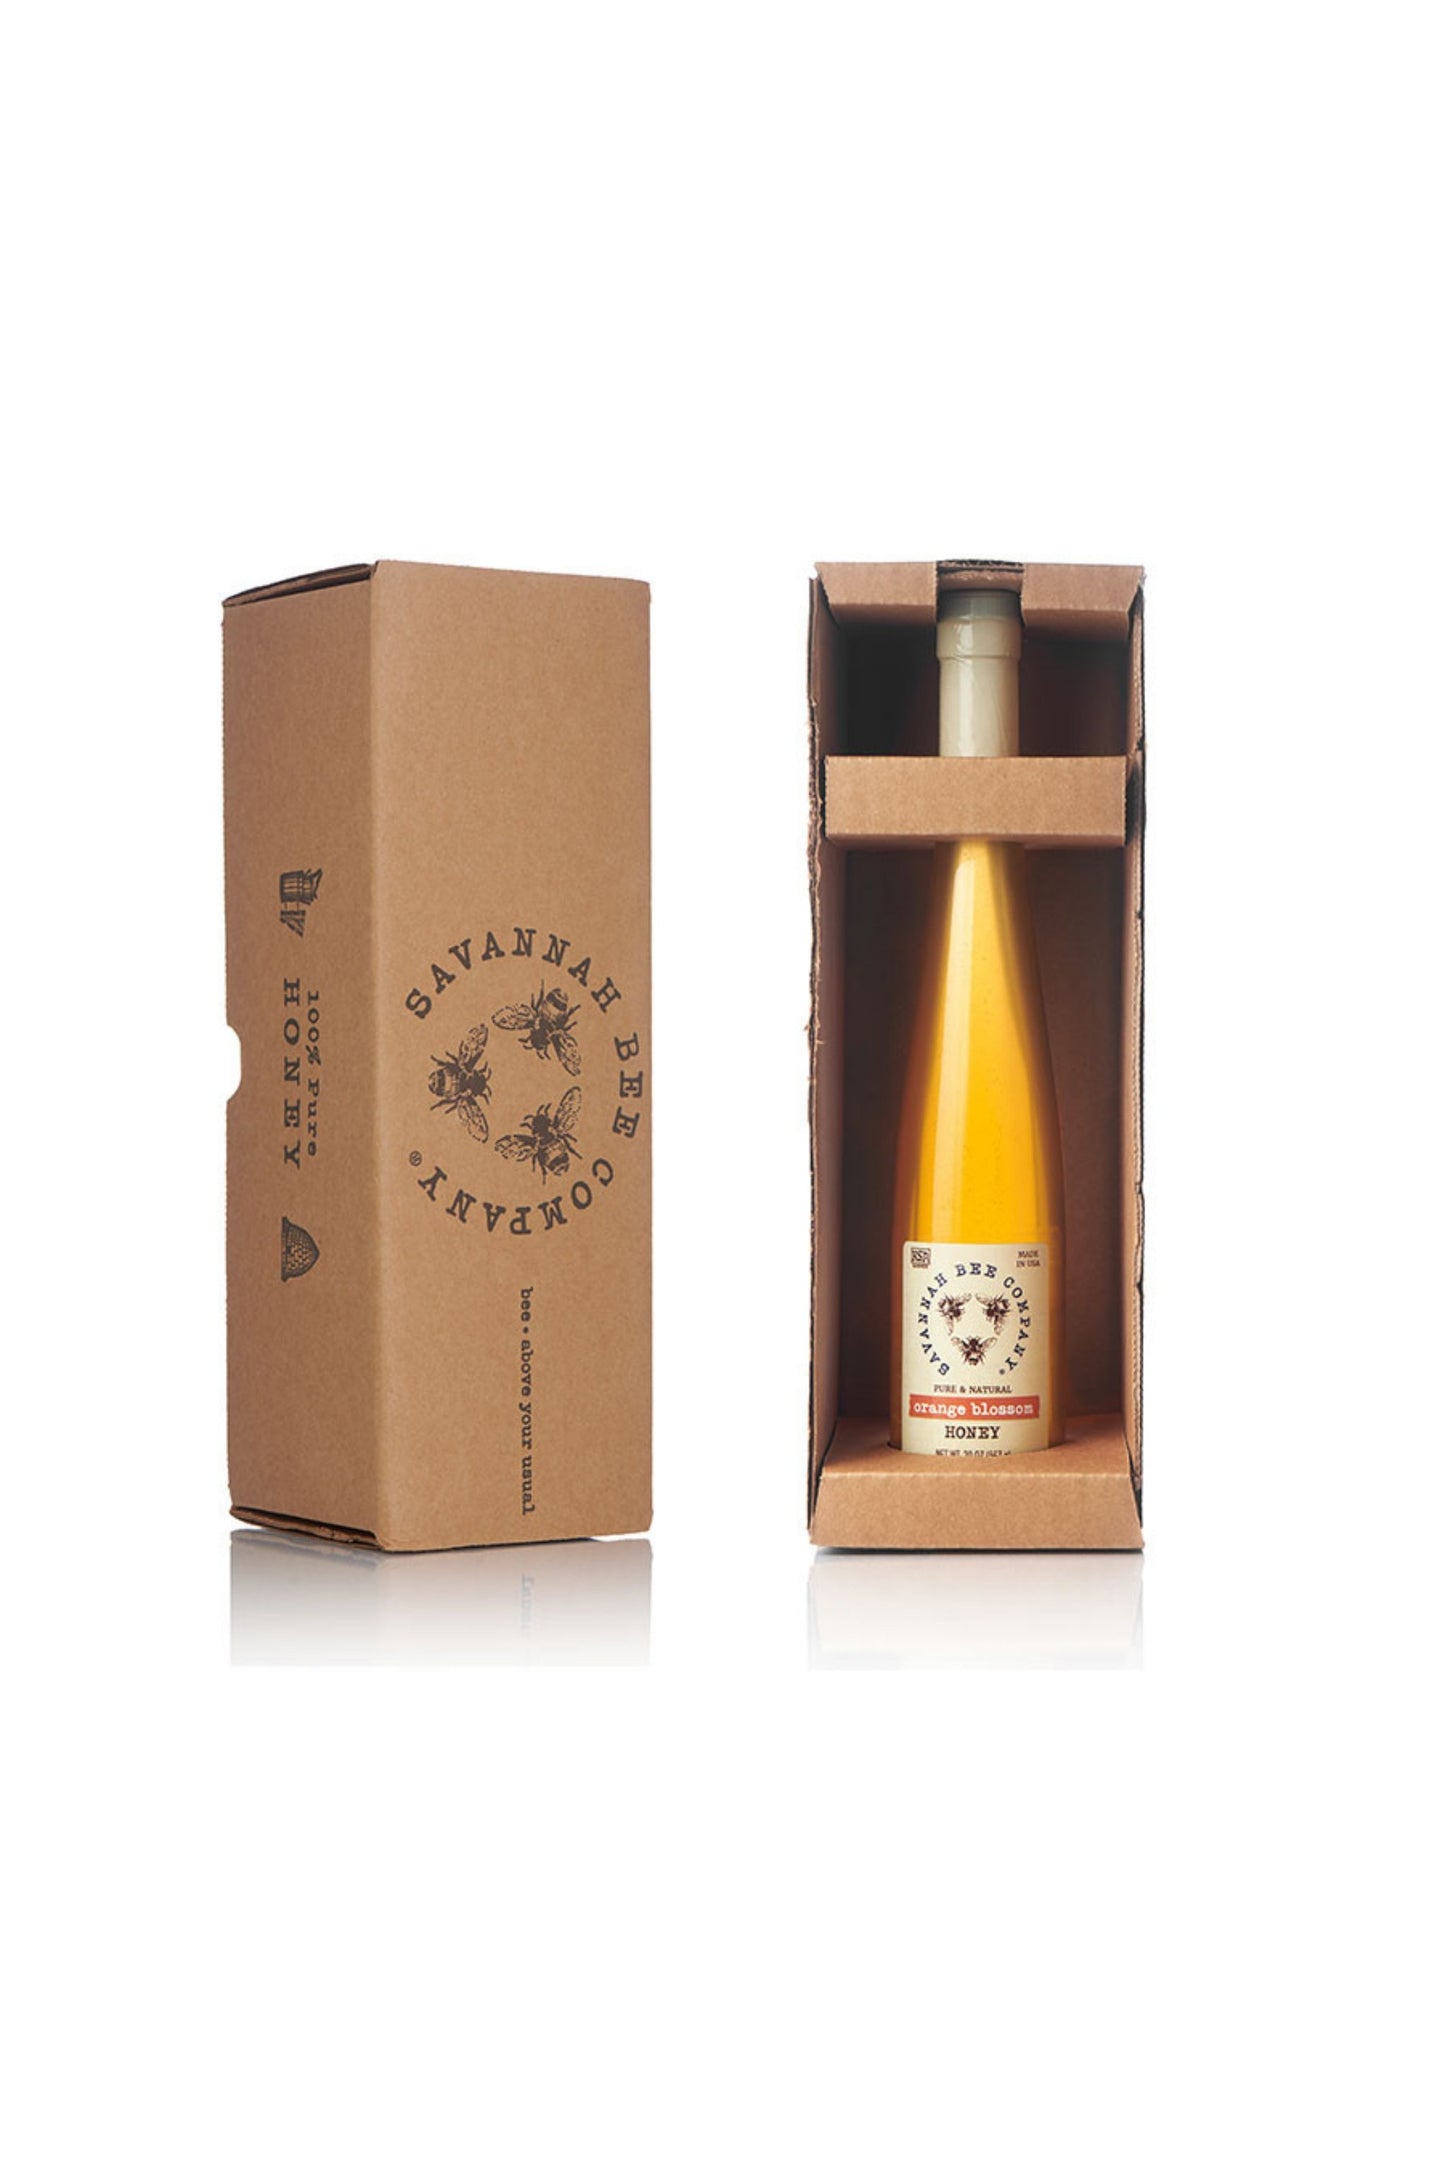 Pure & Natural Orange Blossom Honey 20 oz. flute in a gift box.